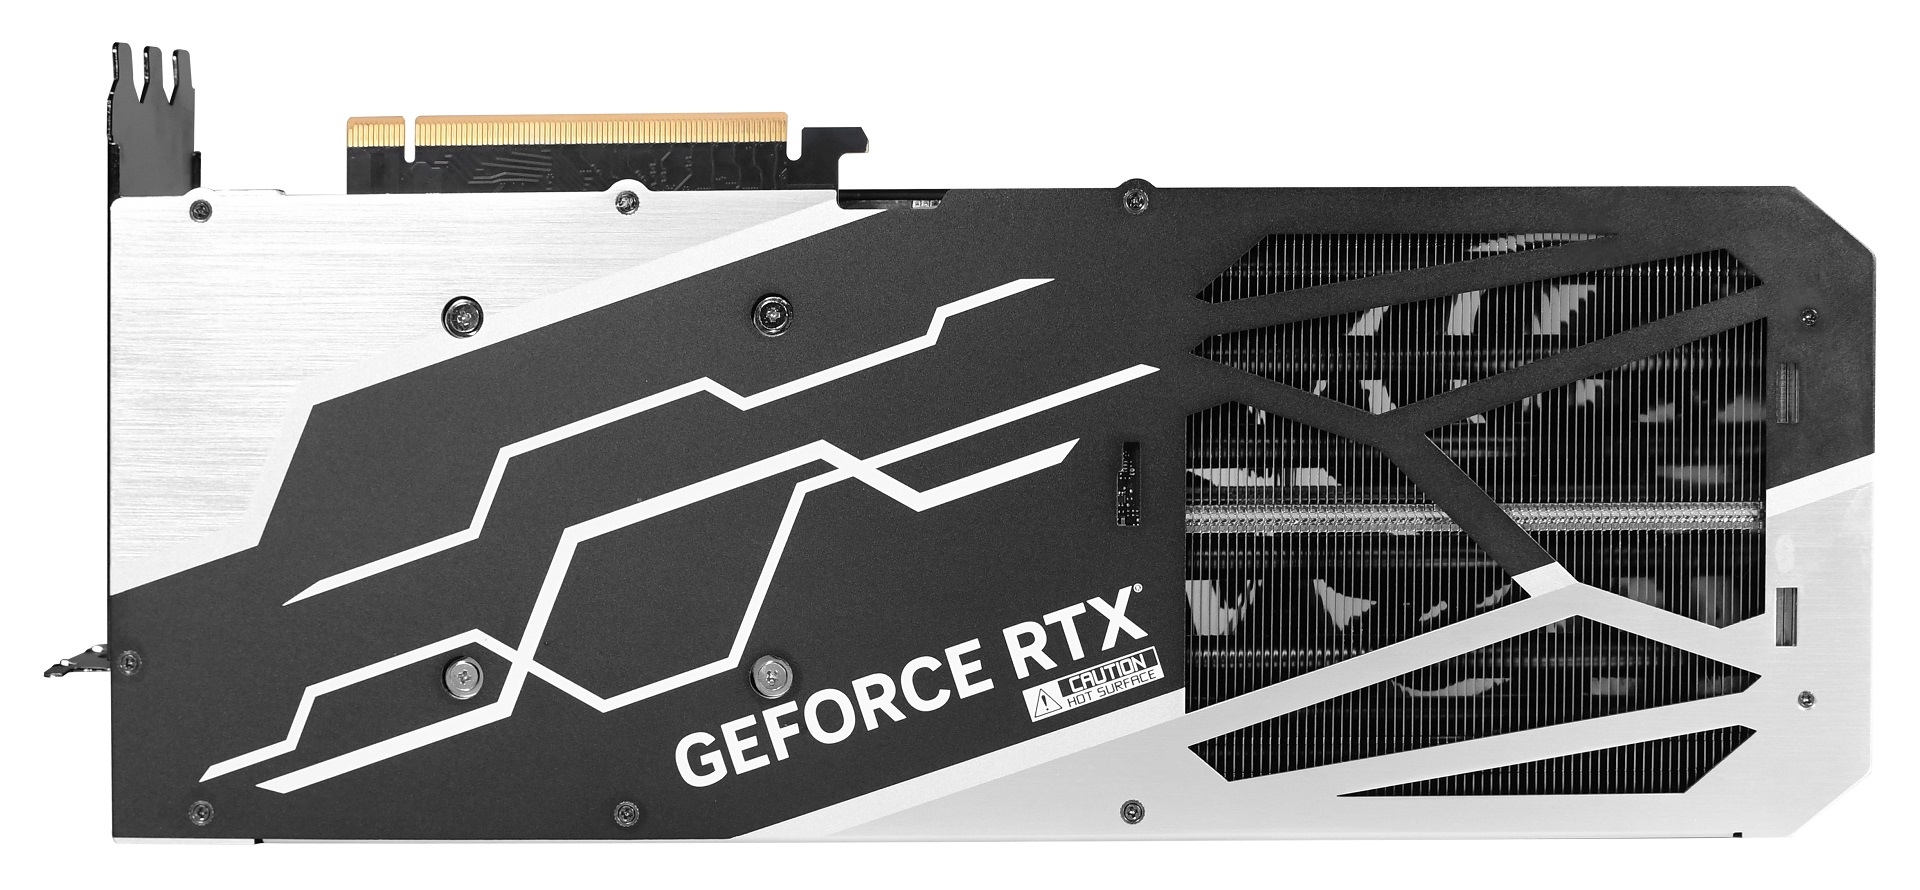 KFA2 GeForce RTX 4080 SUPER SG - backplate